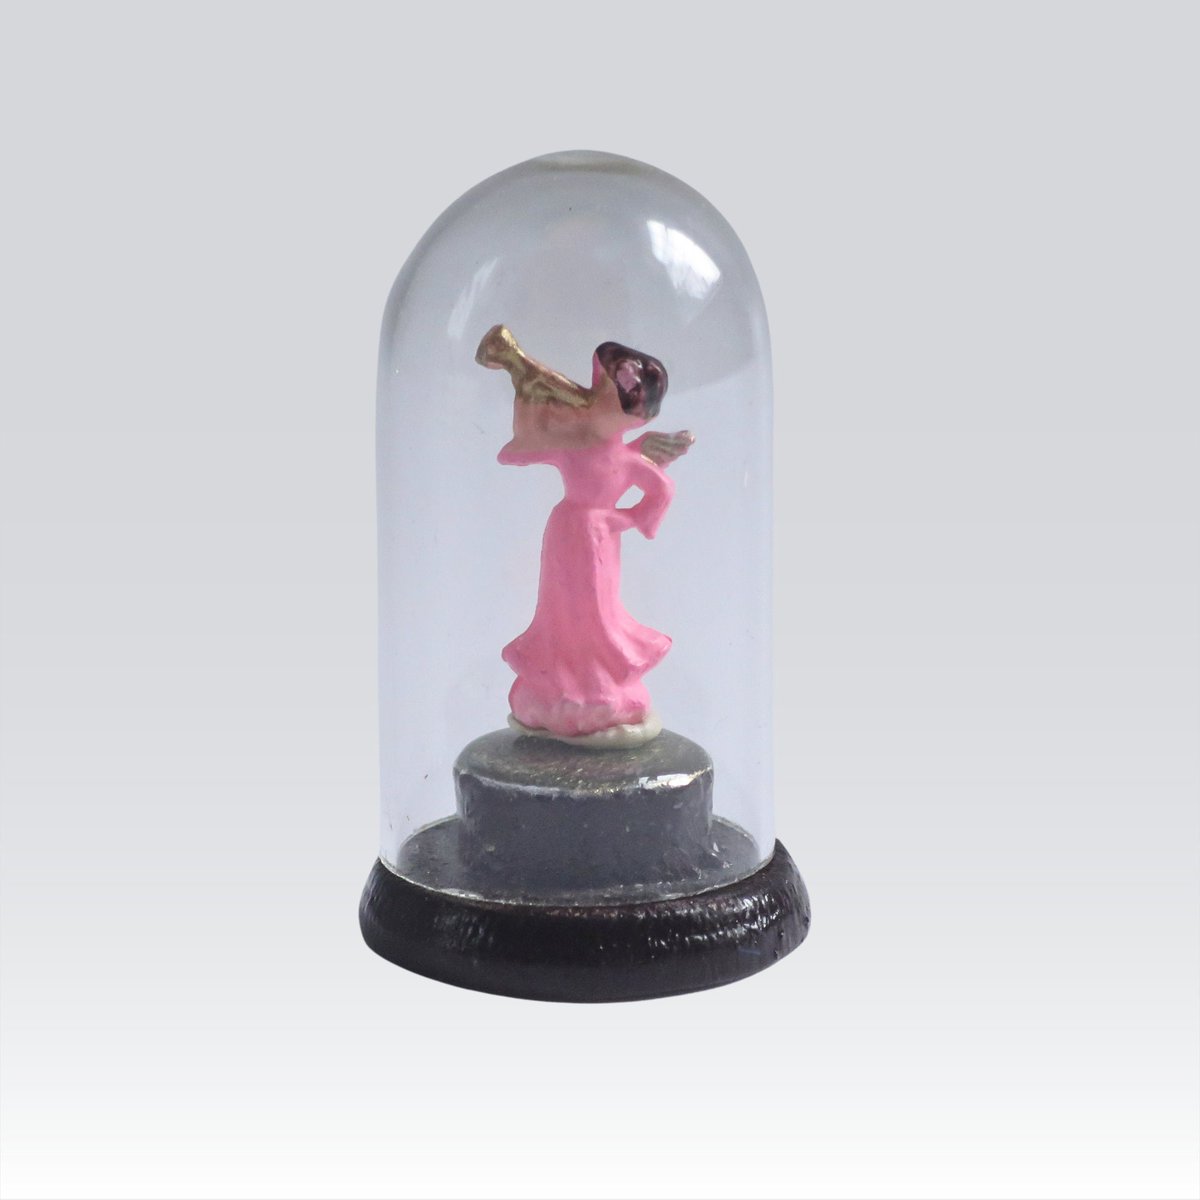 Real Vintage Mini Cloche Glass Dome for Display, Dioramas or Dollhouses tuppu.net/11c27505 #Vintage4Sale #MomDay2024 #SMILEtt23 #EtsyteamUnity